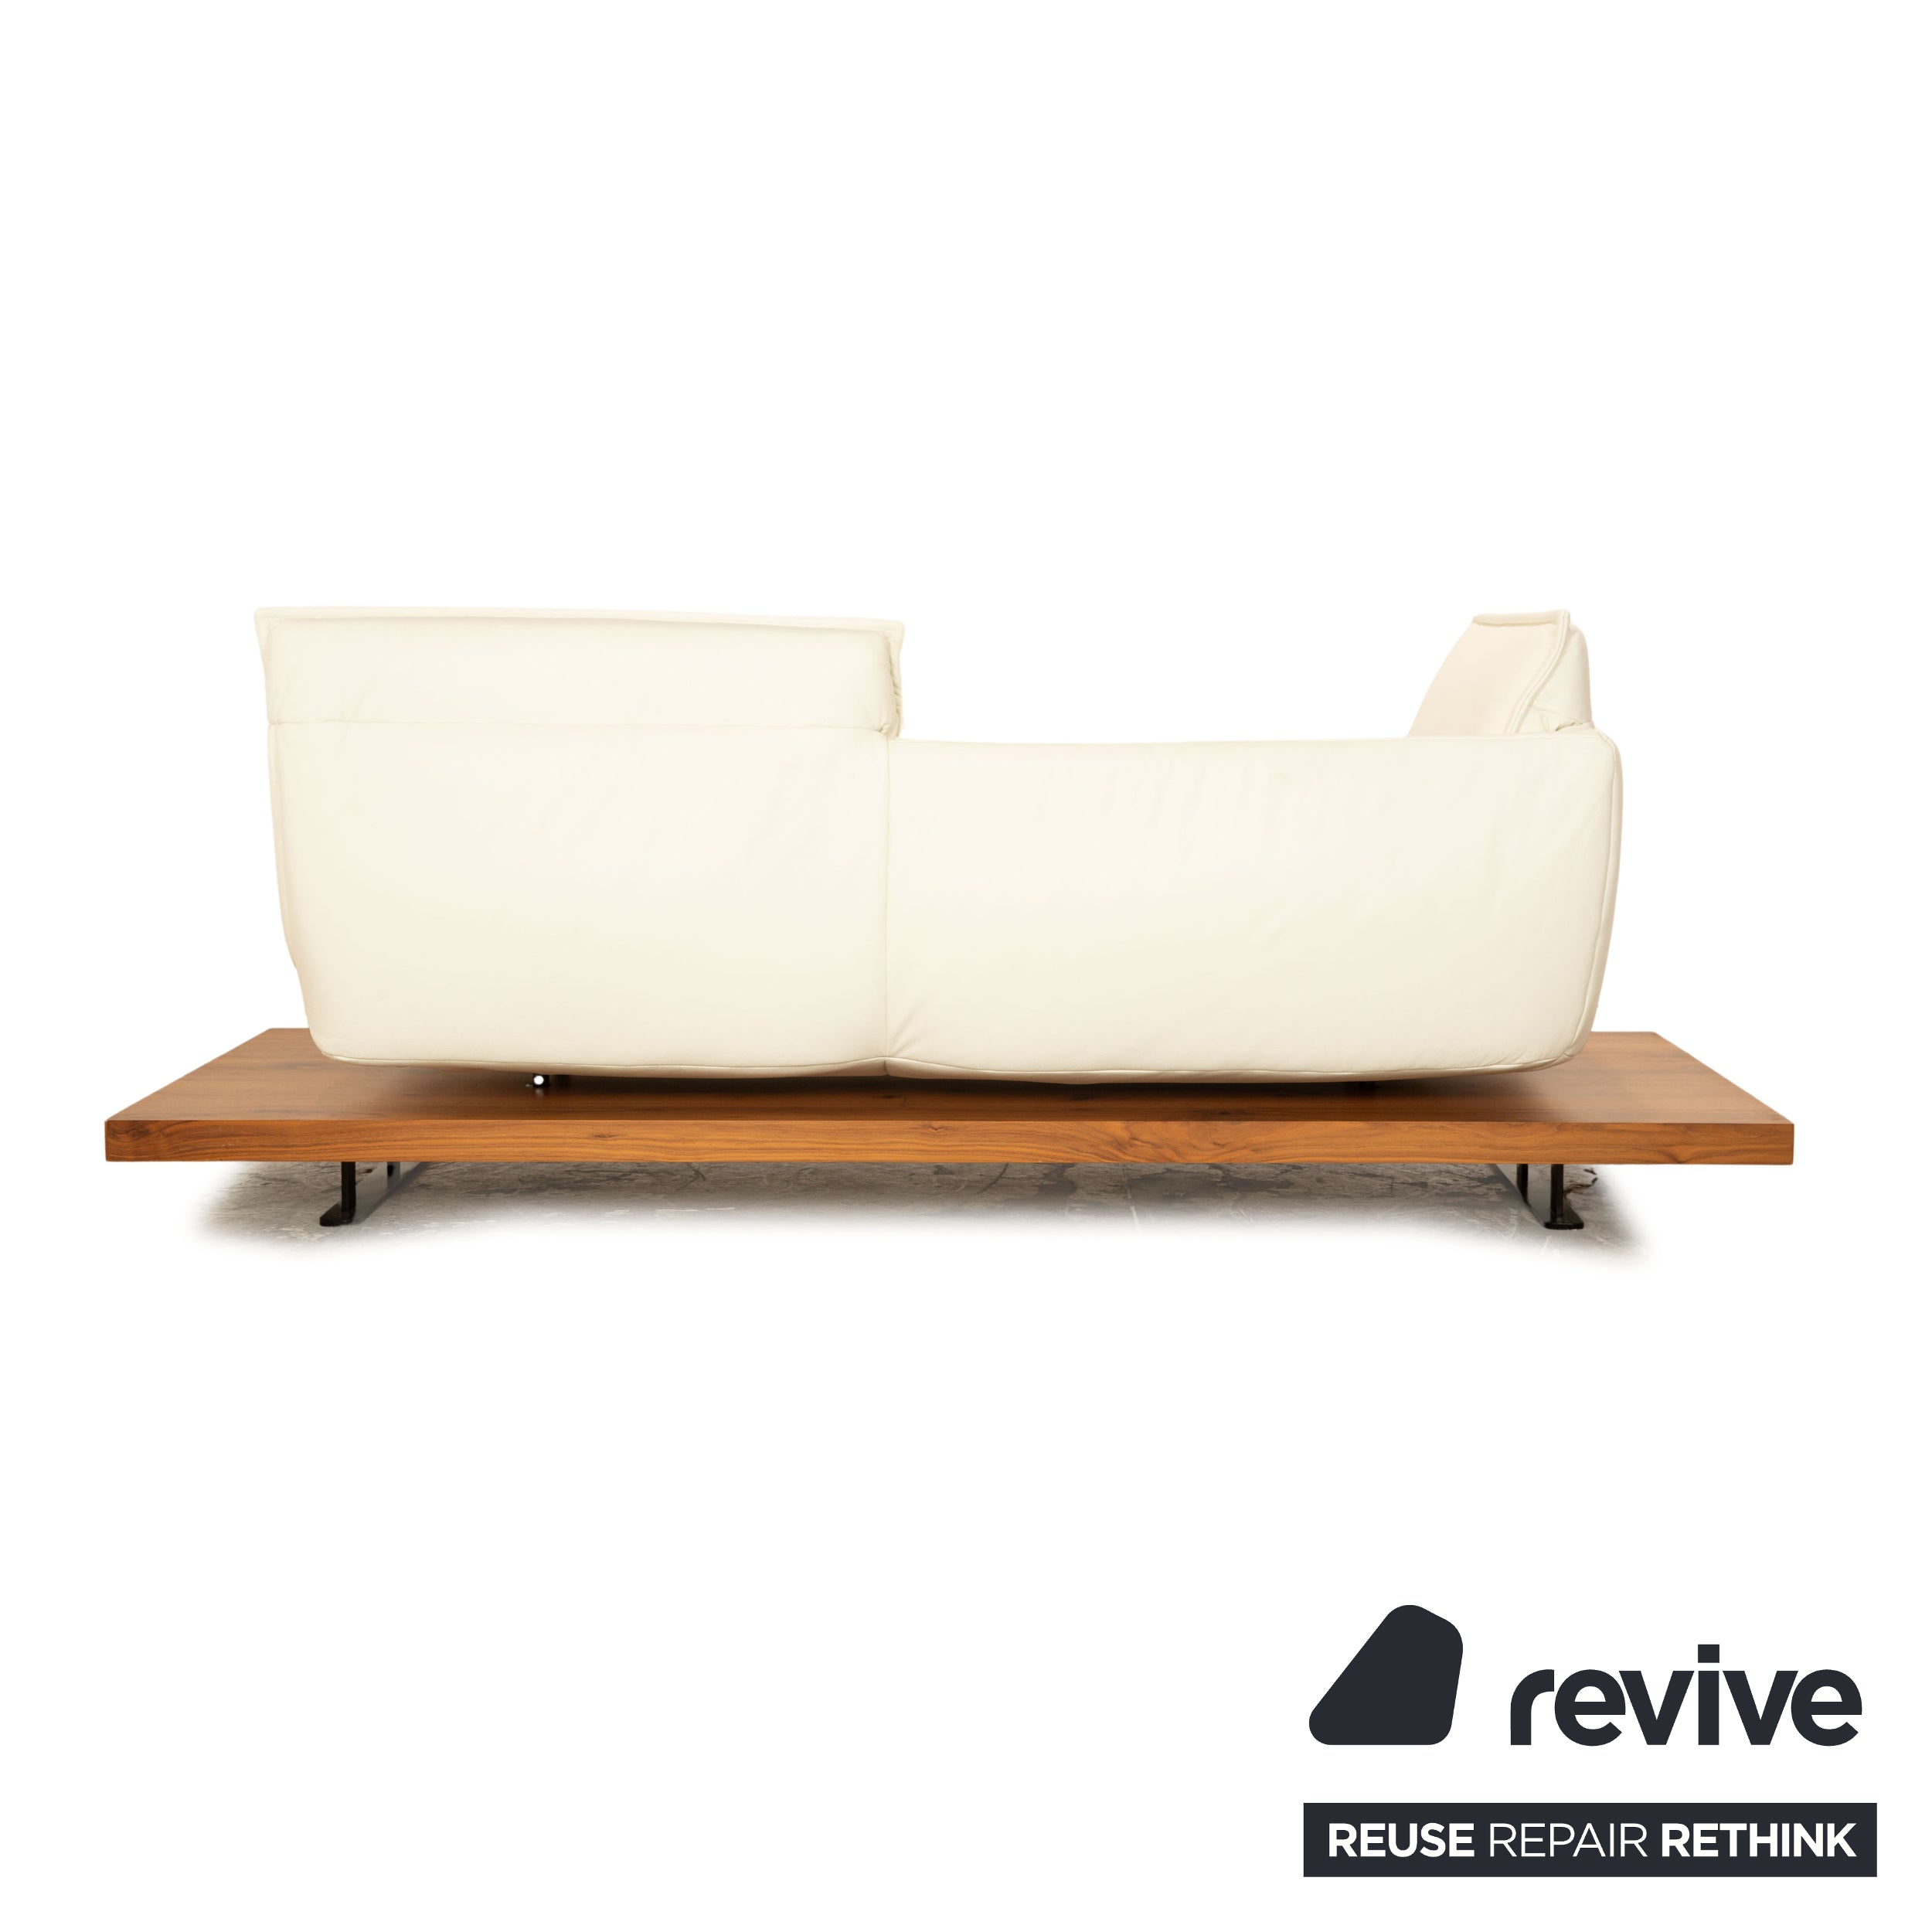 Koinor Free Motion Edit 3 Leder Zweisitzer Creme Sofa Couch manuelle Funktion